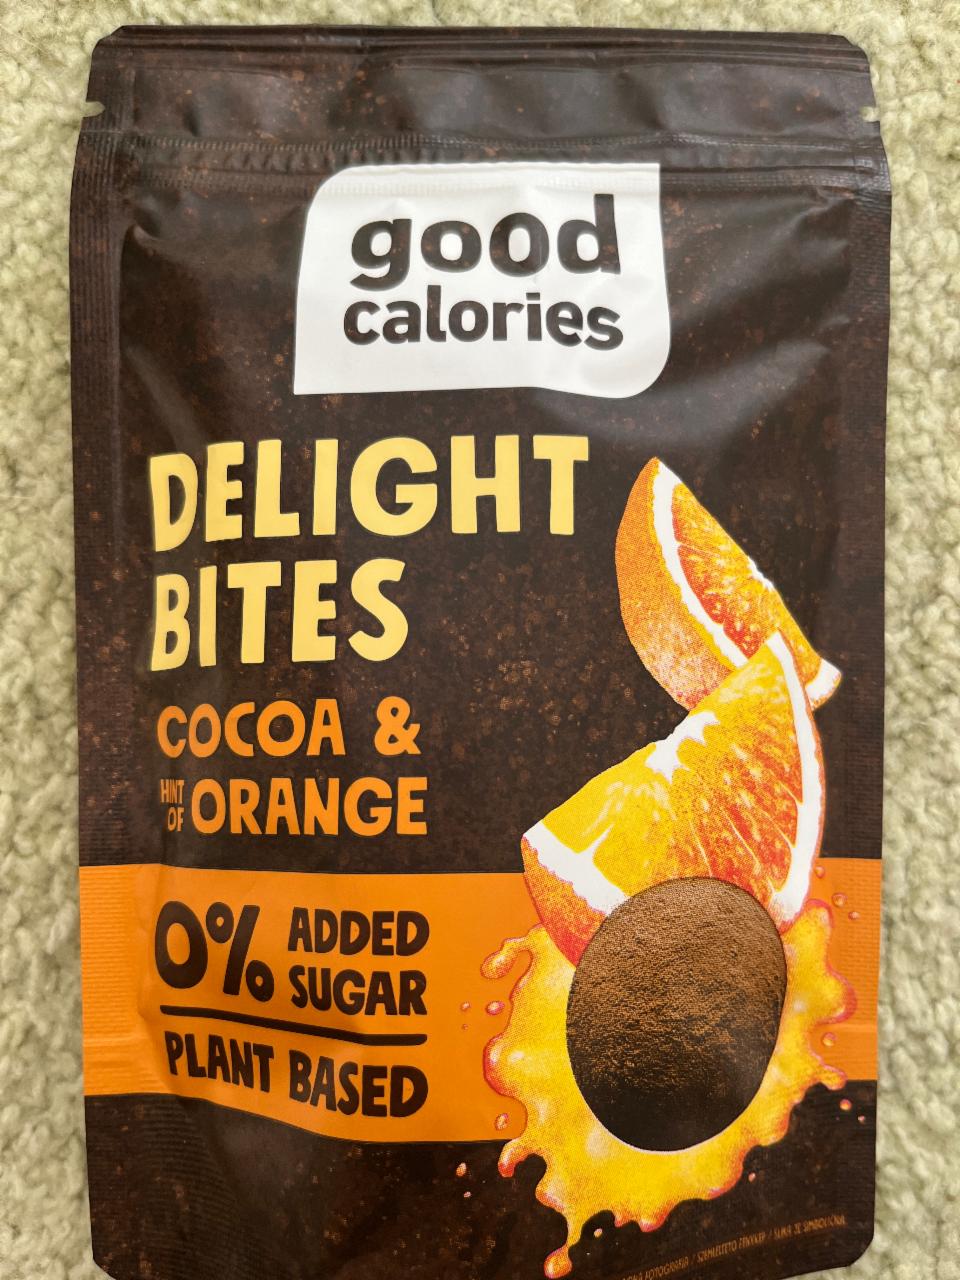 Képek - Delight bites cocoa & hint of orange Good Calories